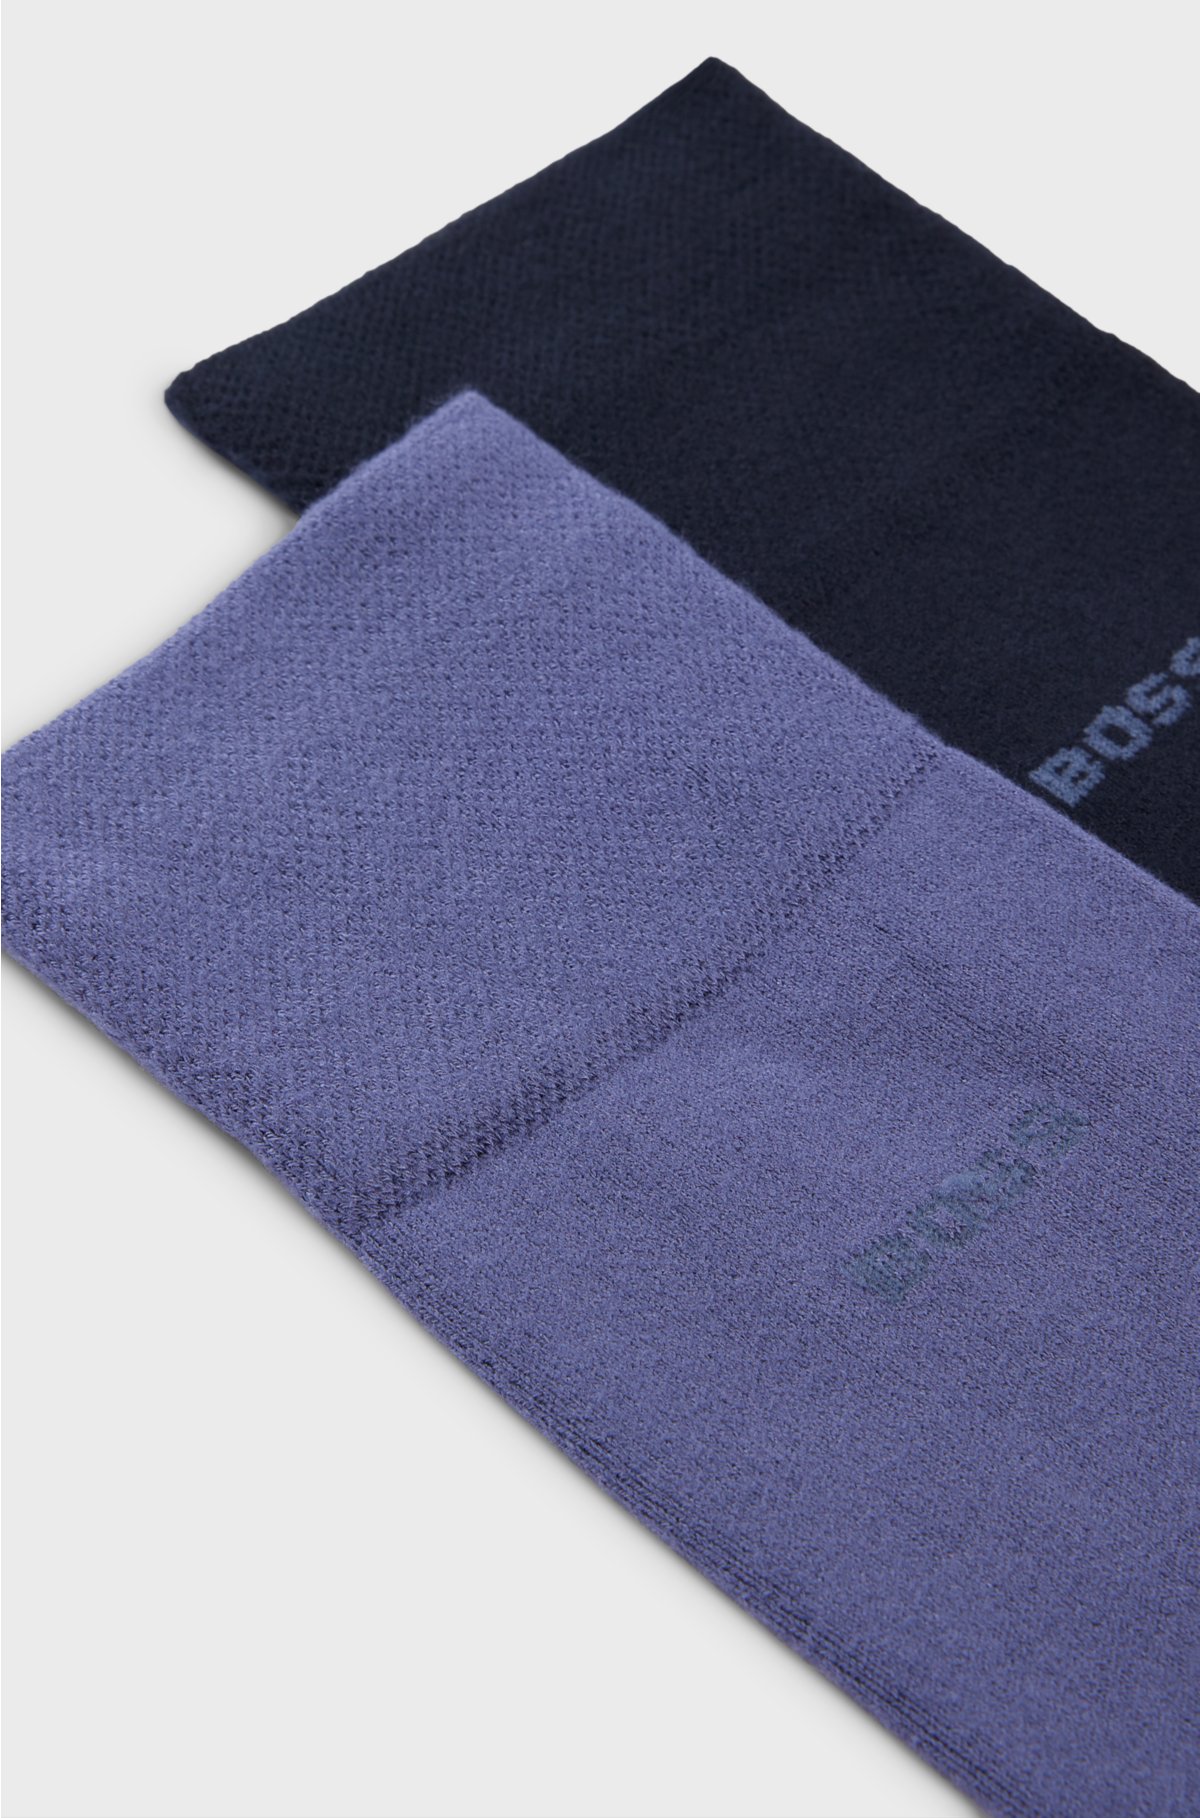 Two-pack of regular-length socks in soft viscose bamboo, Blue